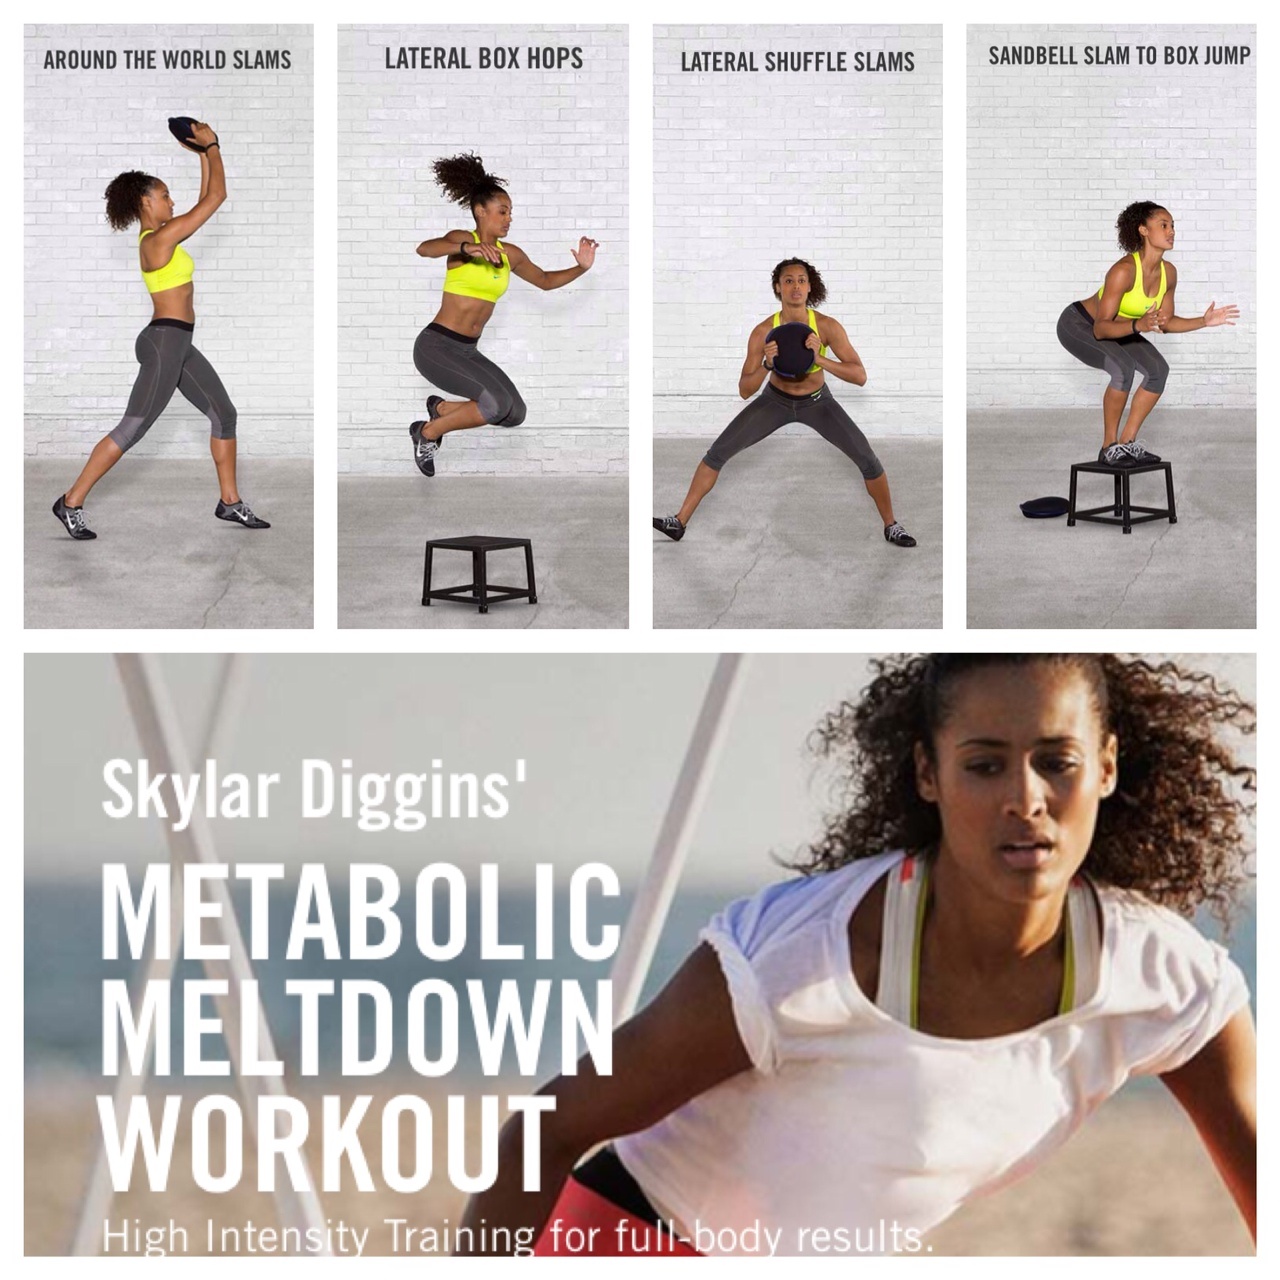 Work out now. Nike HIIT Workout. Metabolic фитнес. HIIT metabolic тренировка. Nike Training app.